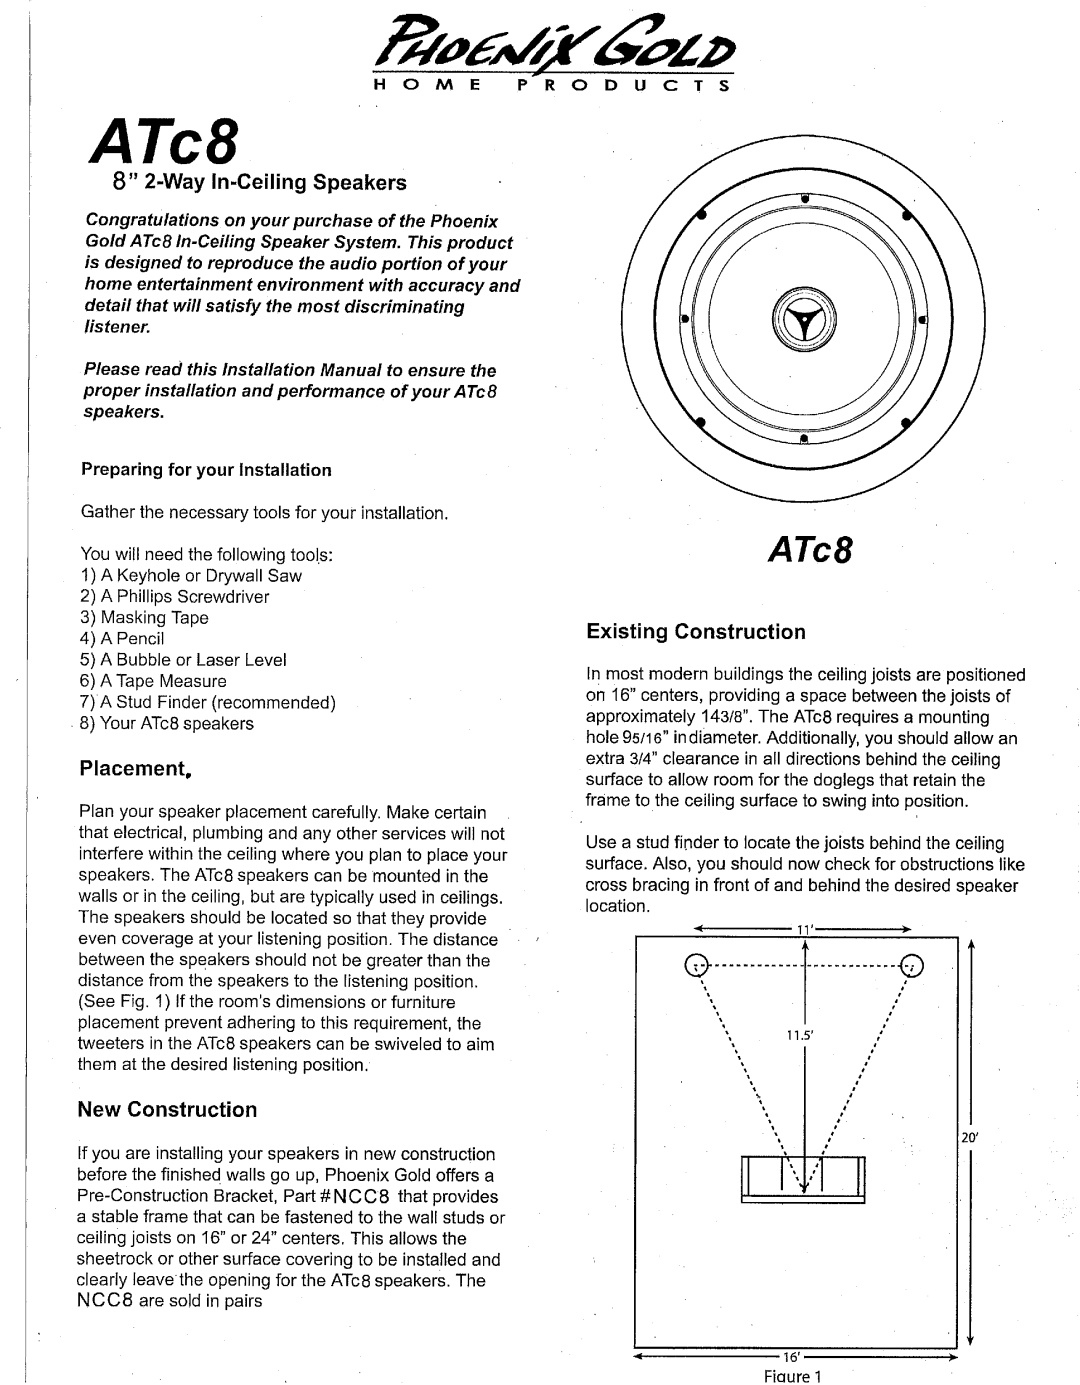 Phoenix Gold 8" 2-Way In-Ceiling Speakers, ATc8 manual 